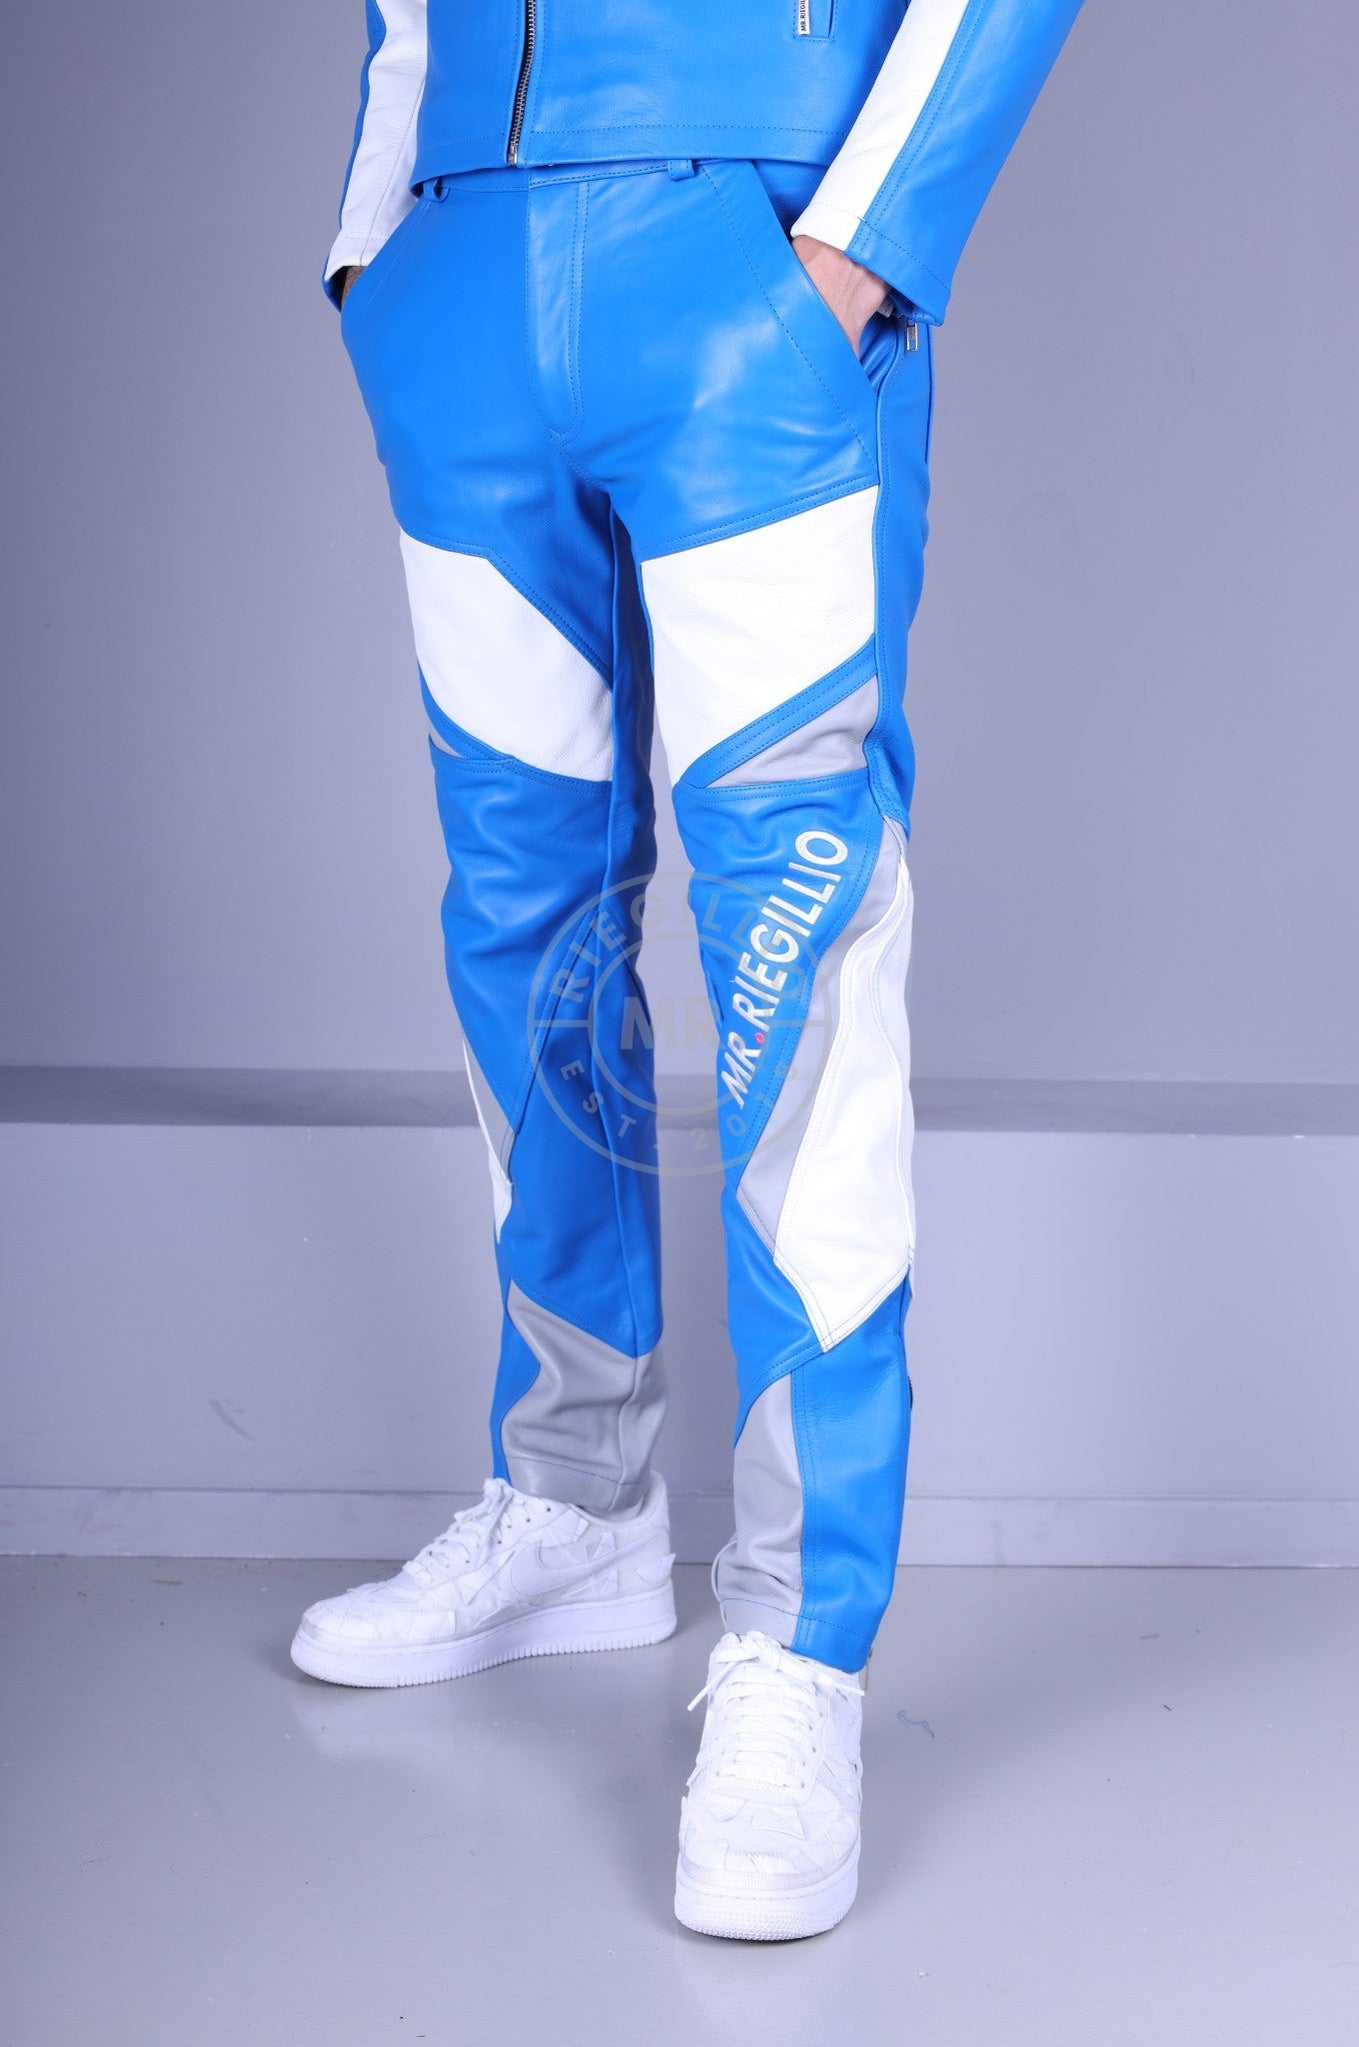 Leather Biker Logo Pants - Blue / White  *DISCONTINUED ITEM*